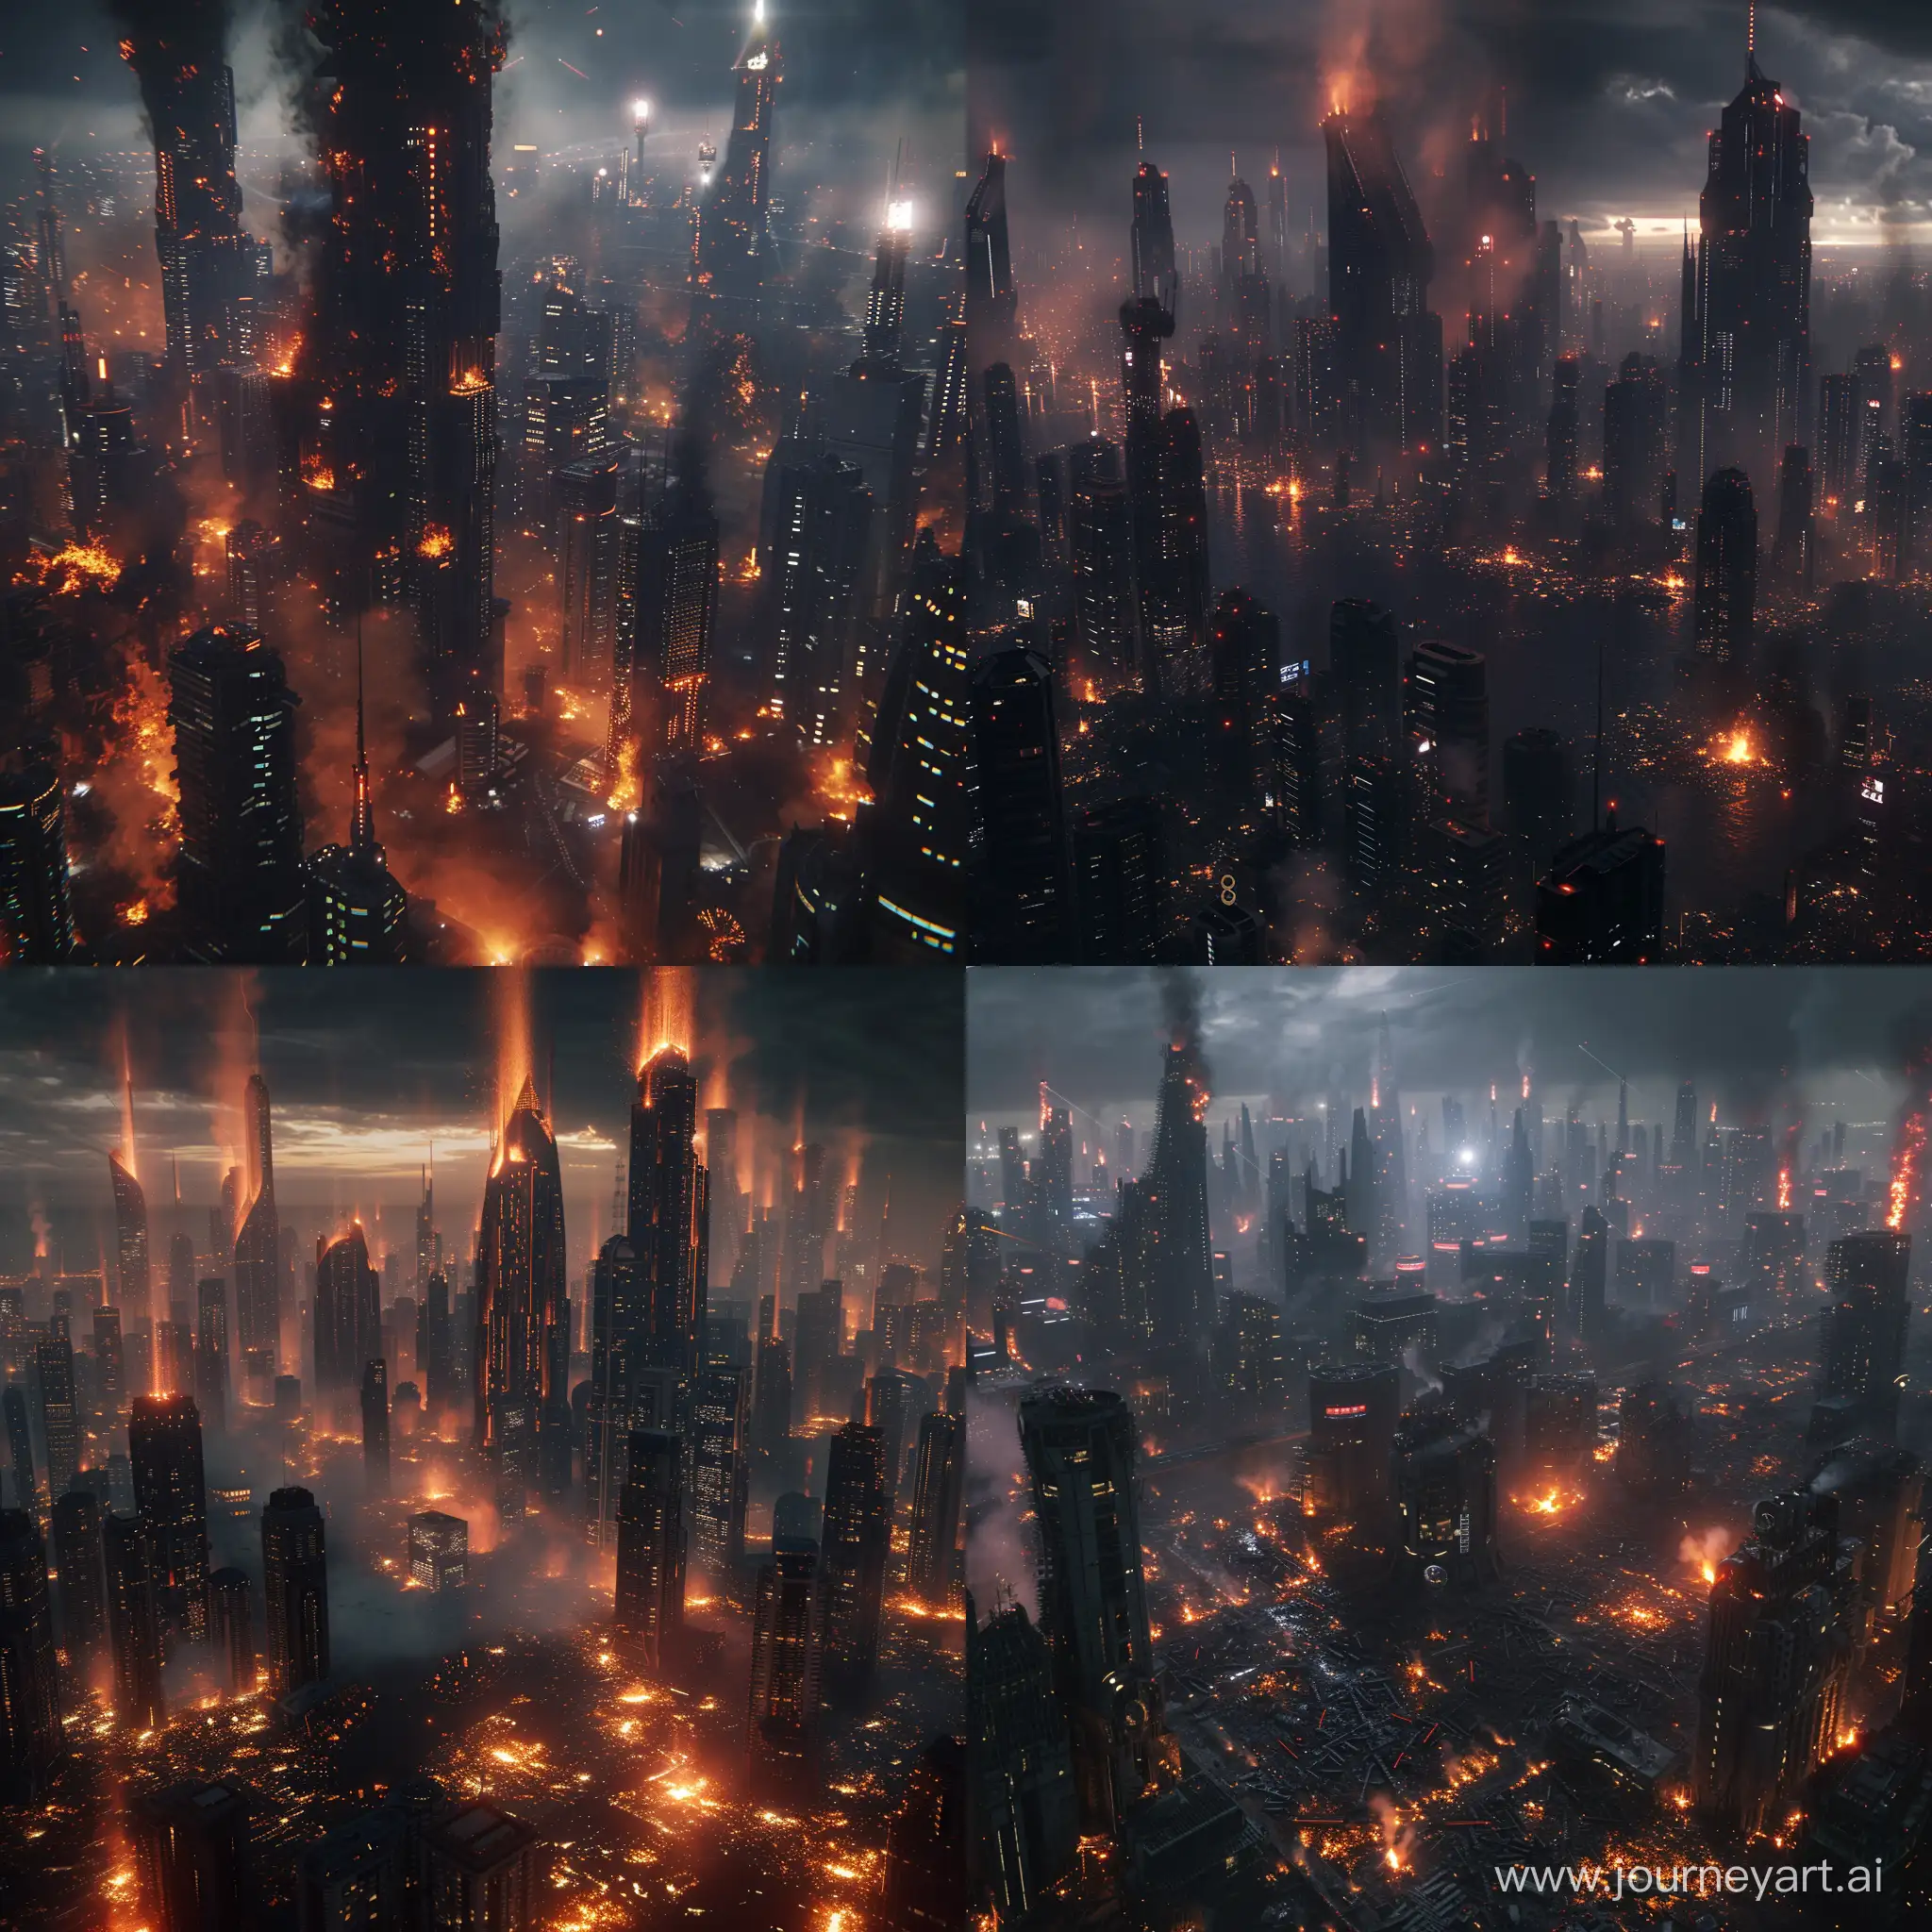 Dystopian-Future-Cityscape-with-Fiery-Night-Skyline